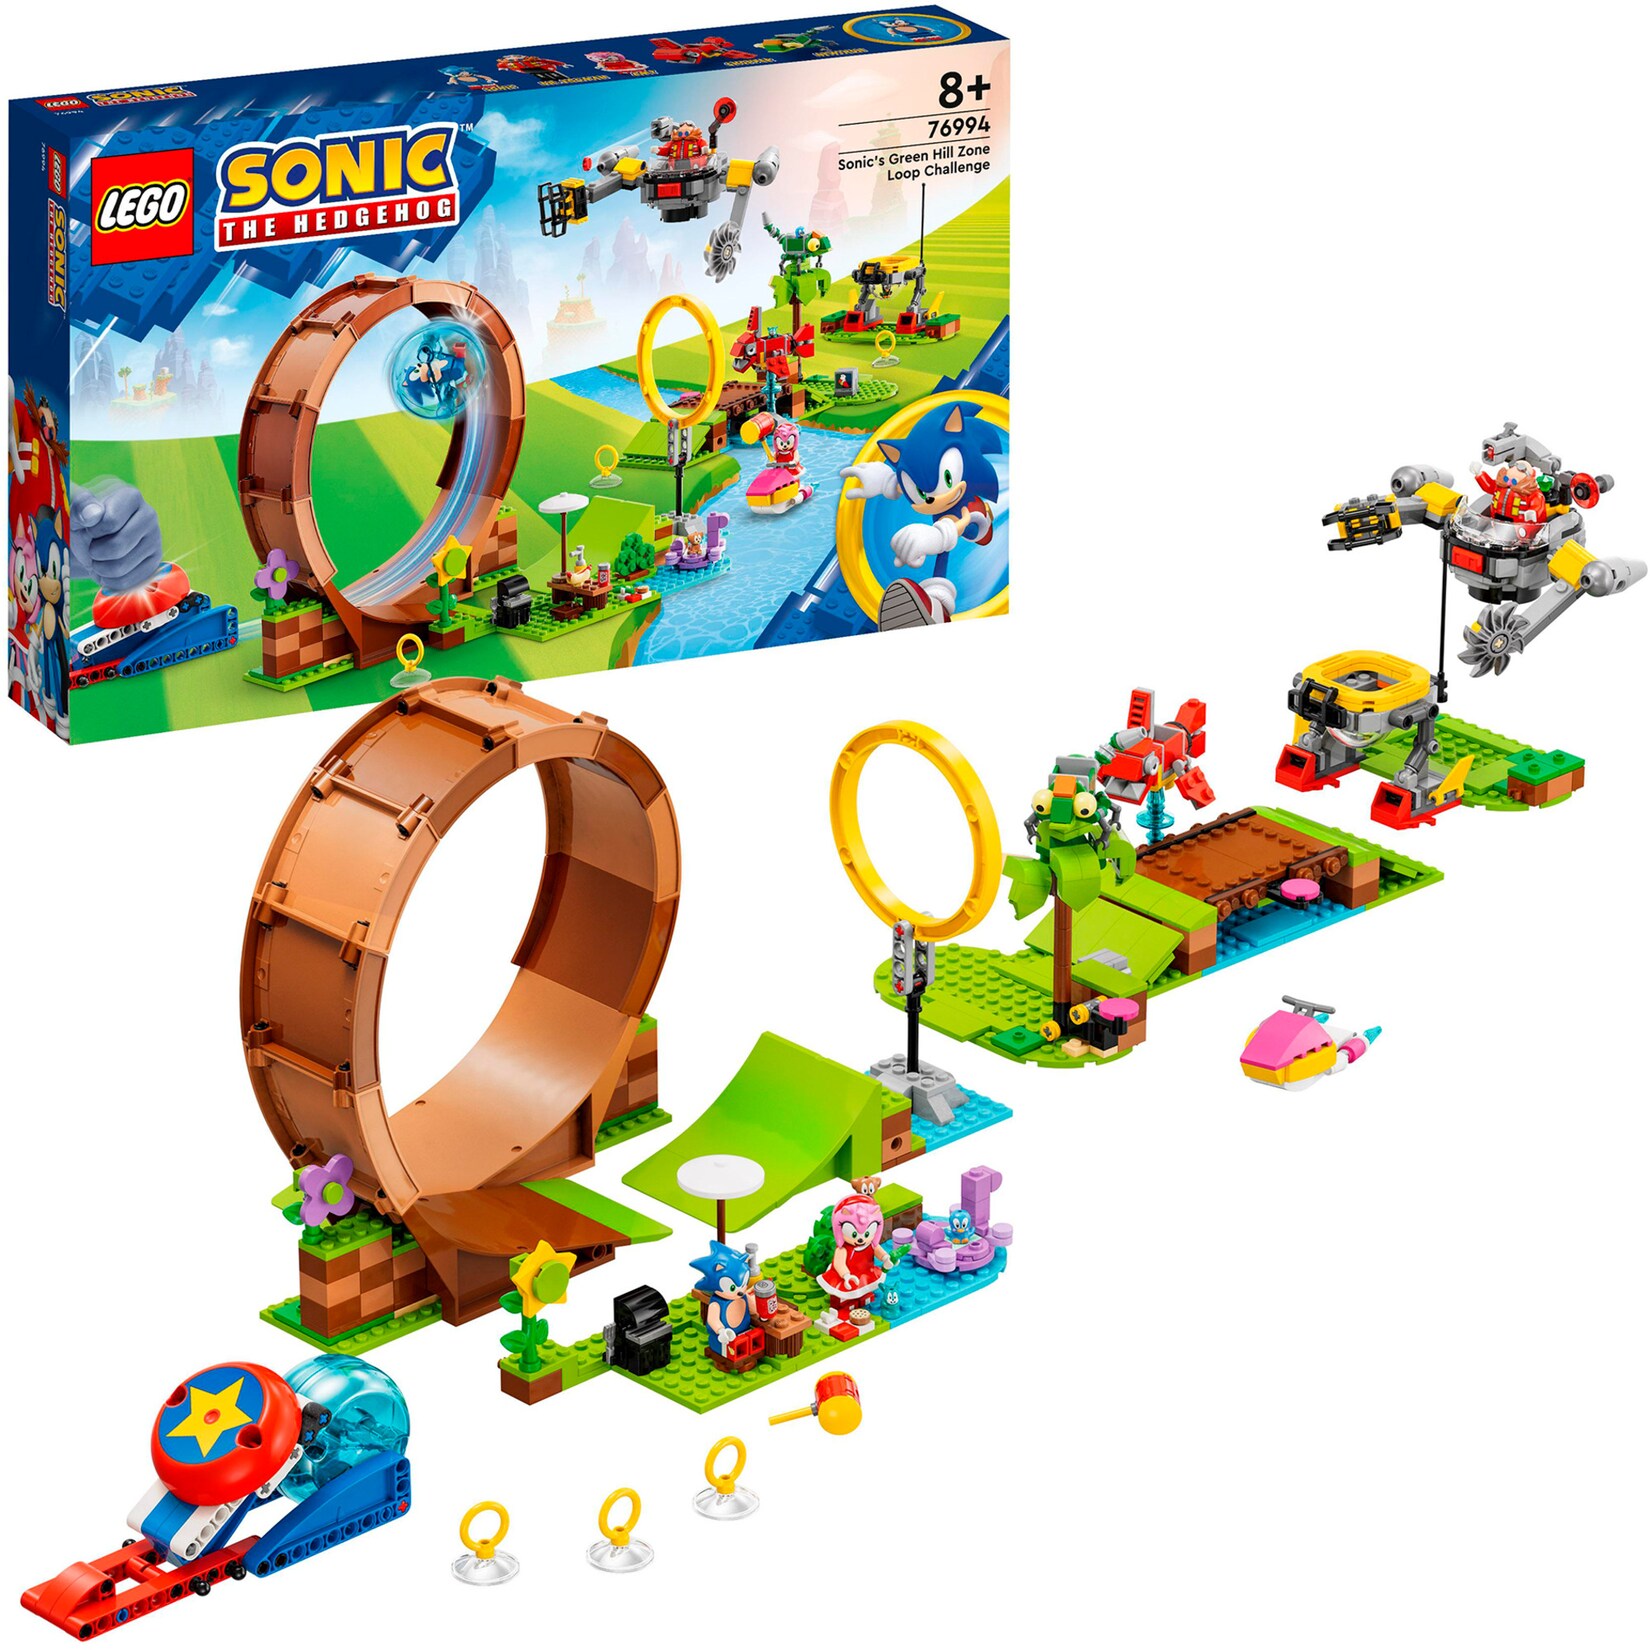 LEGO Konstruktionsspielzeug Sonic the Hedgehog Sonics Looping-Challenge in der Green Hill Zone